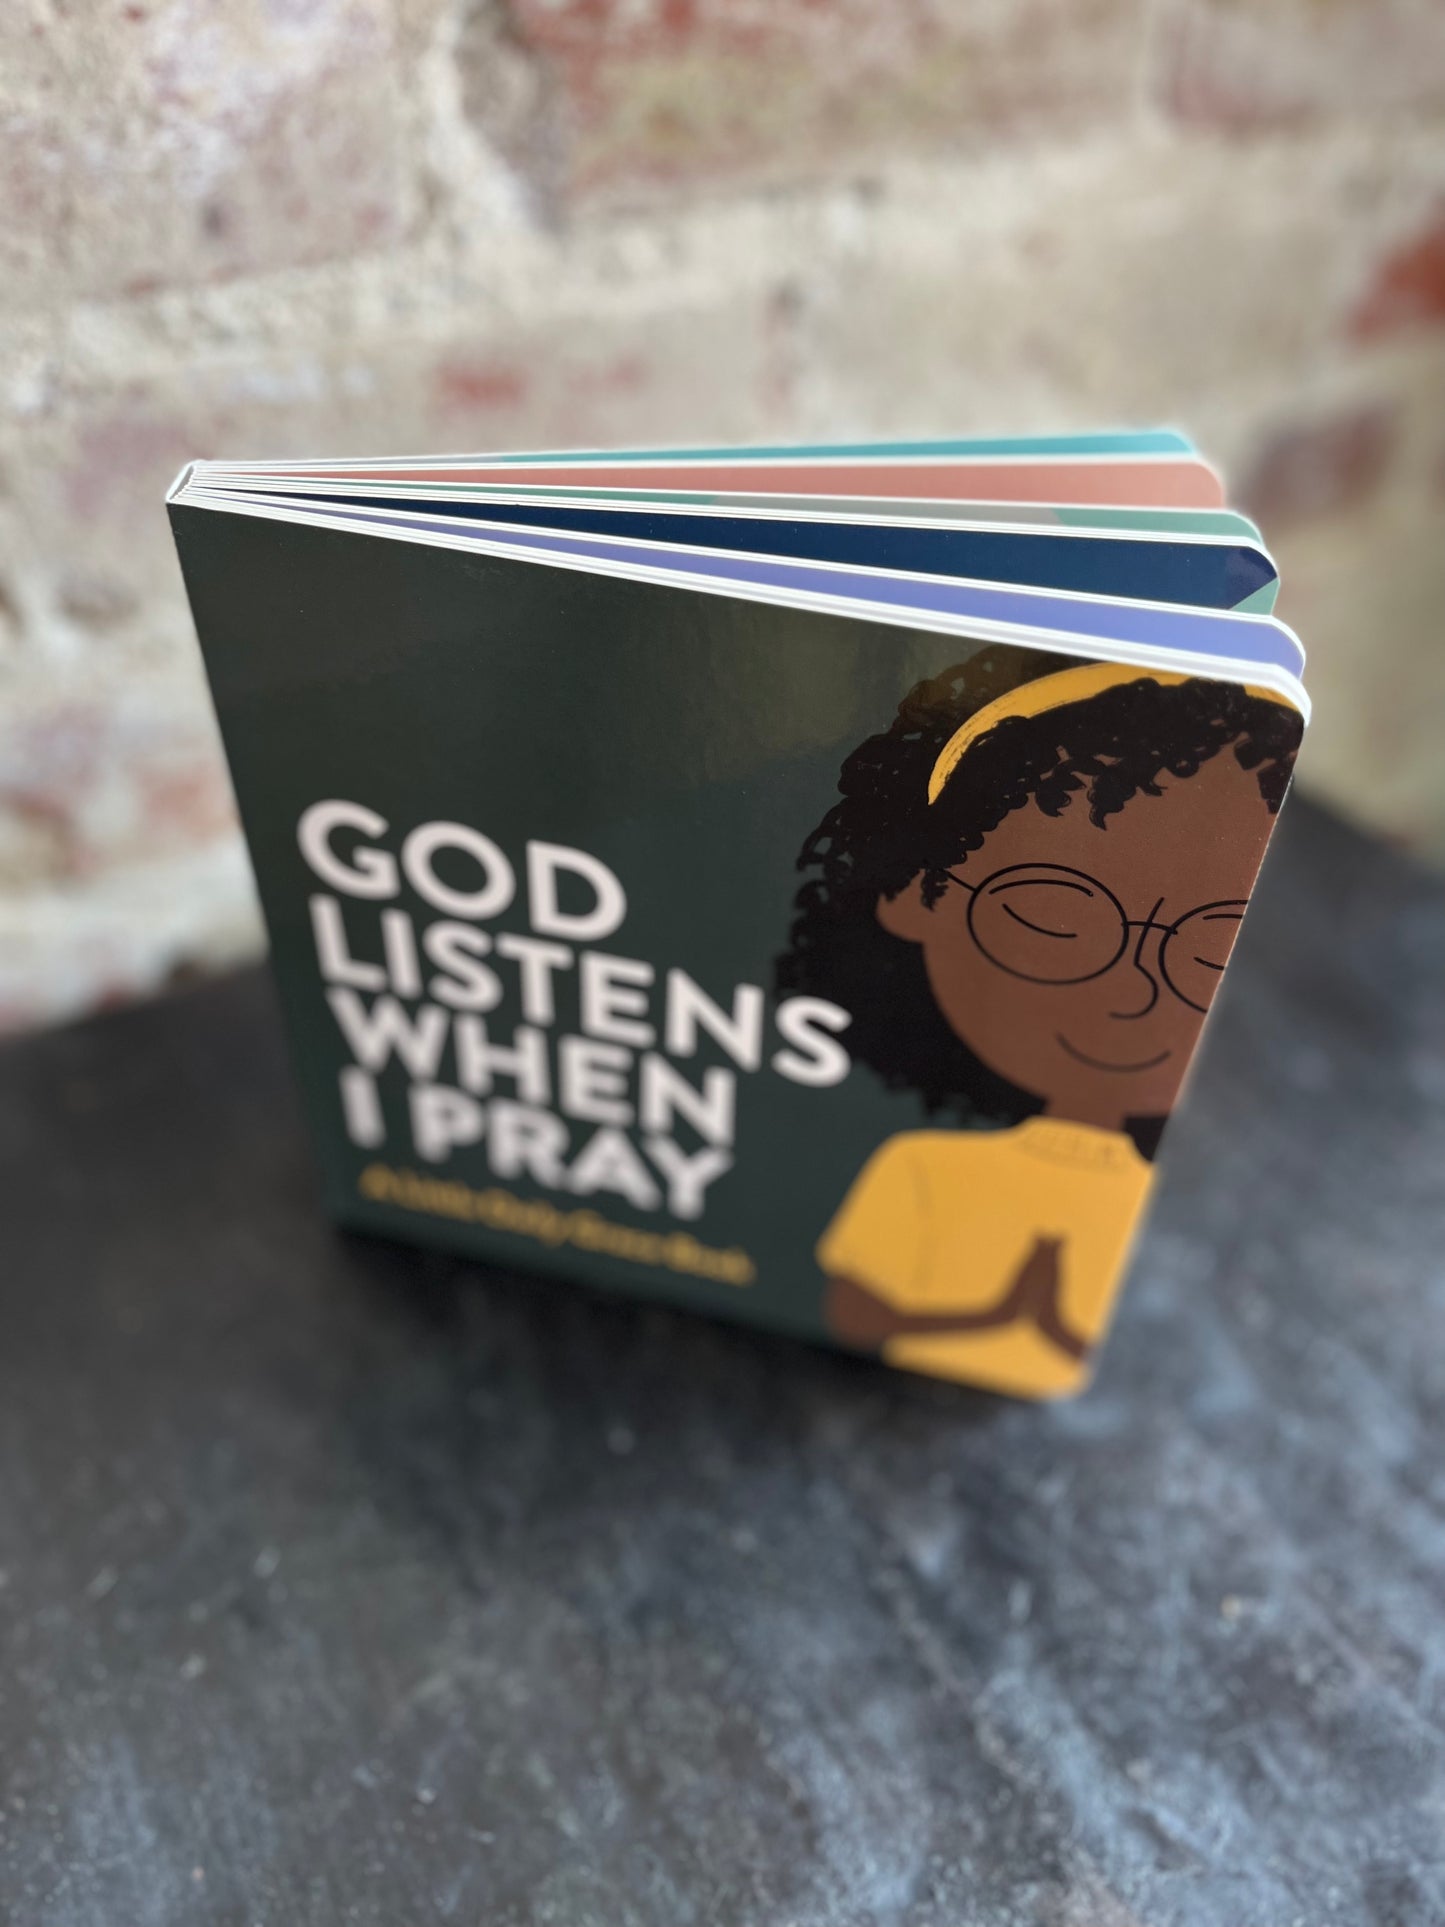 God Listens When I Pray Board Book